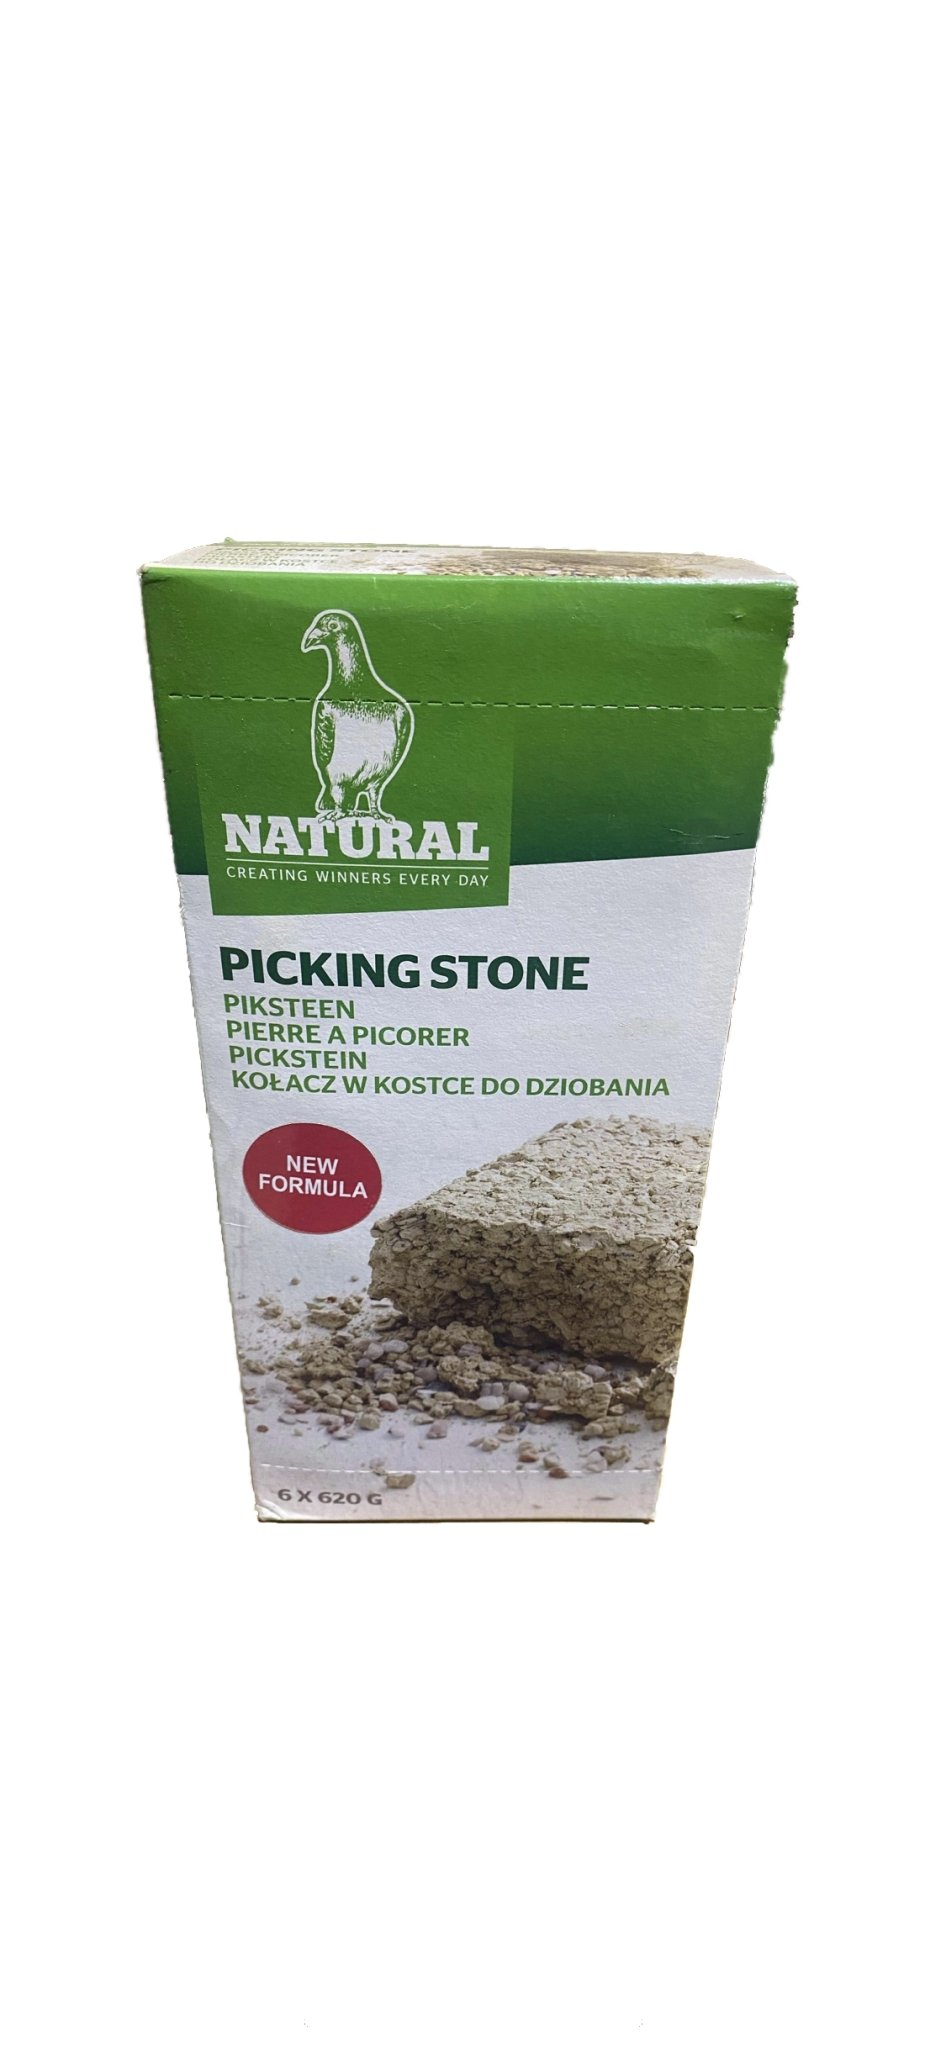 Natural Picking Stone 6x620g - Woonona Petfood & Produce